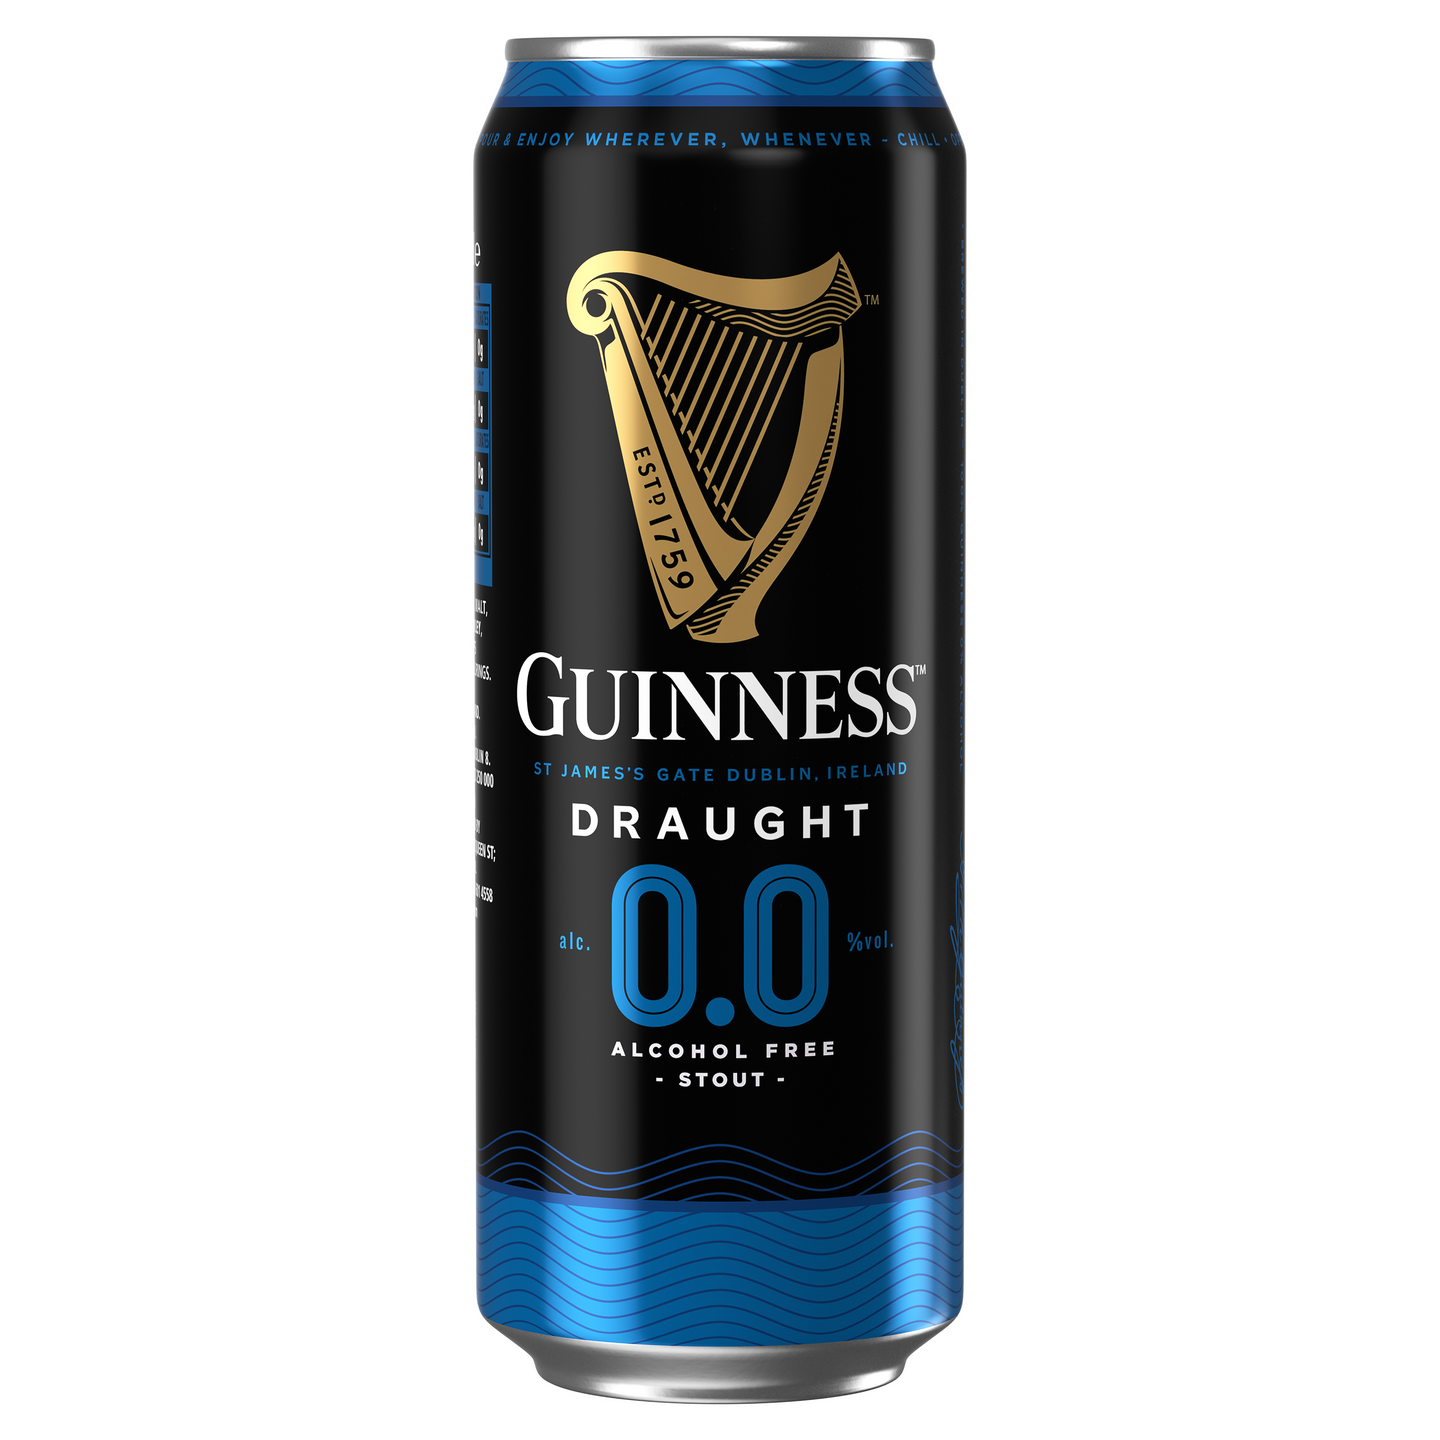 Guinness alkoholiton Stout 0,0%